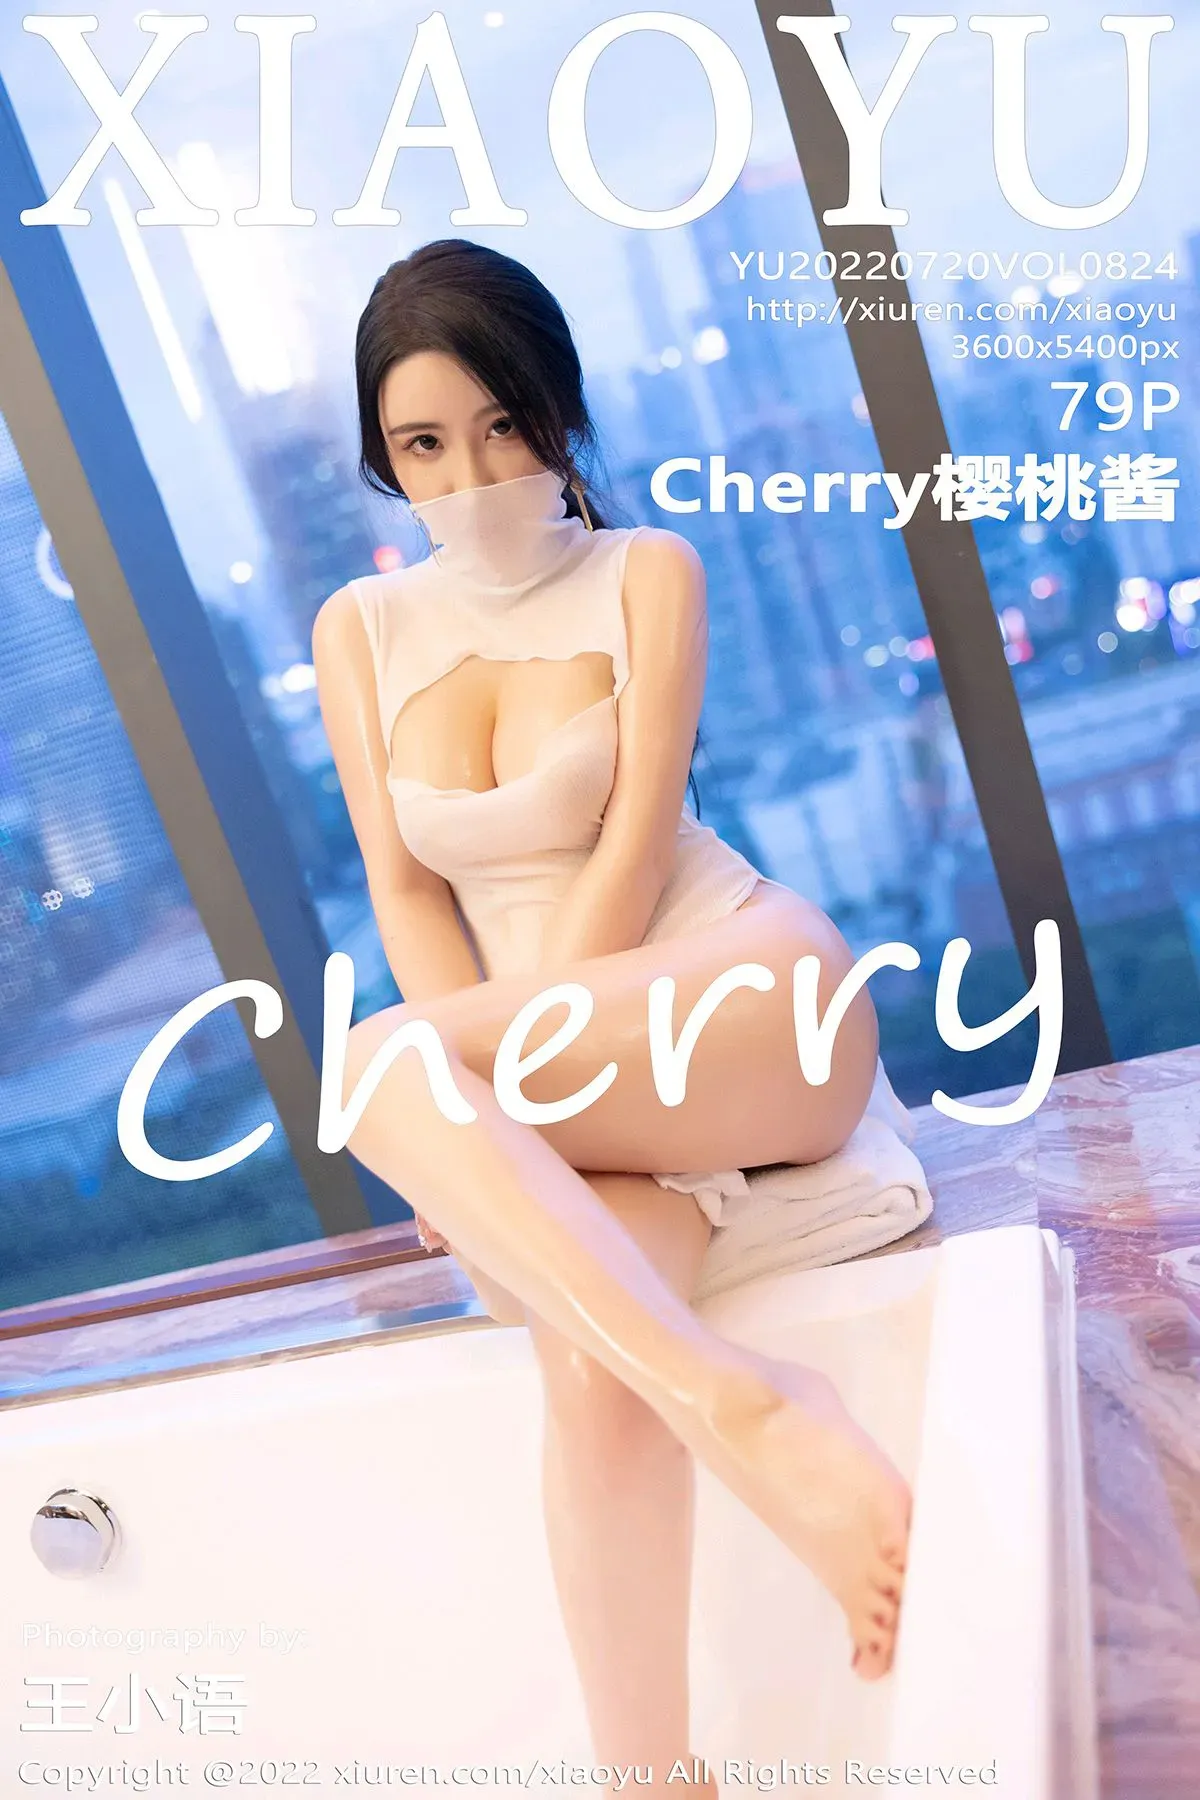 [XIAOYU语画界]2022.07.20 VOL.824 Cherry樱桃酱[79P]插图